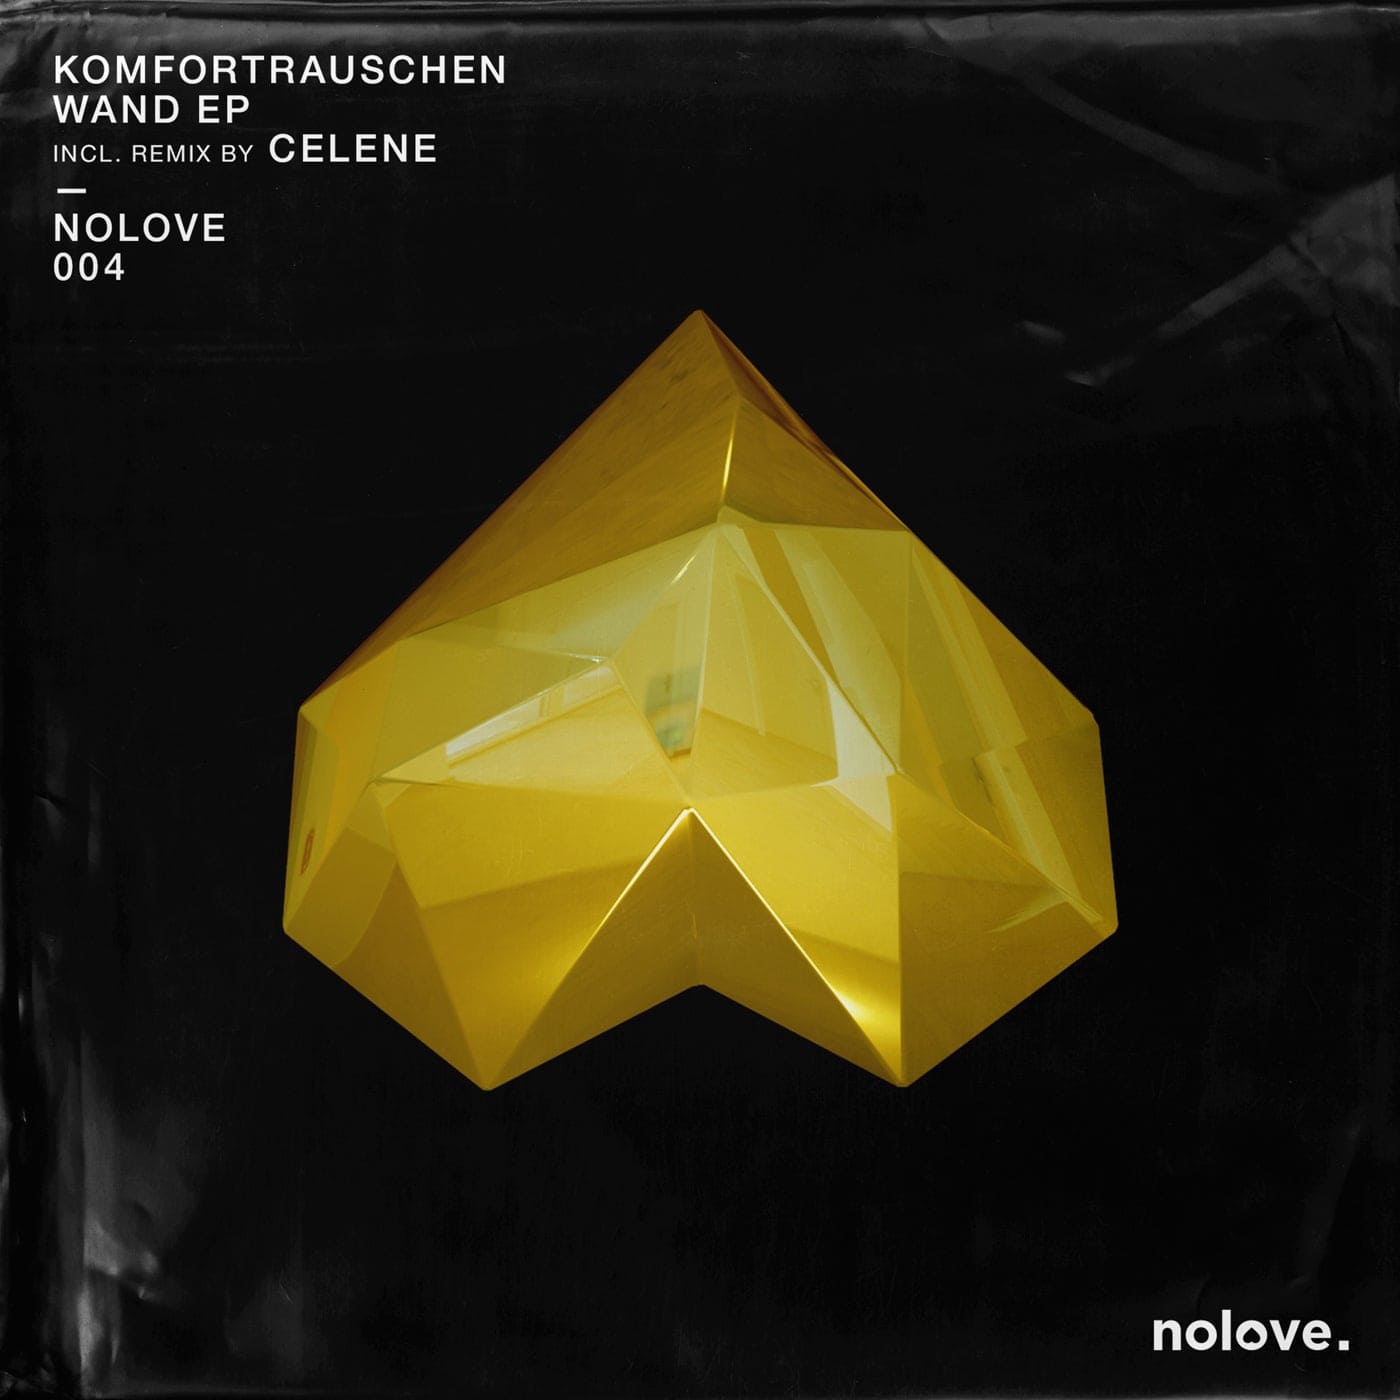 Download KOMFORTRAUSCHEN, Celene - Wand EP on Electrobuzz